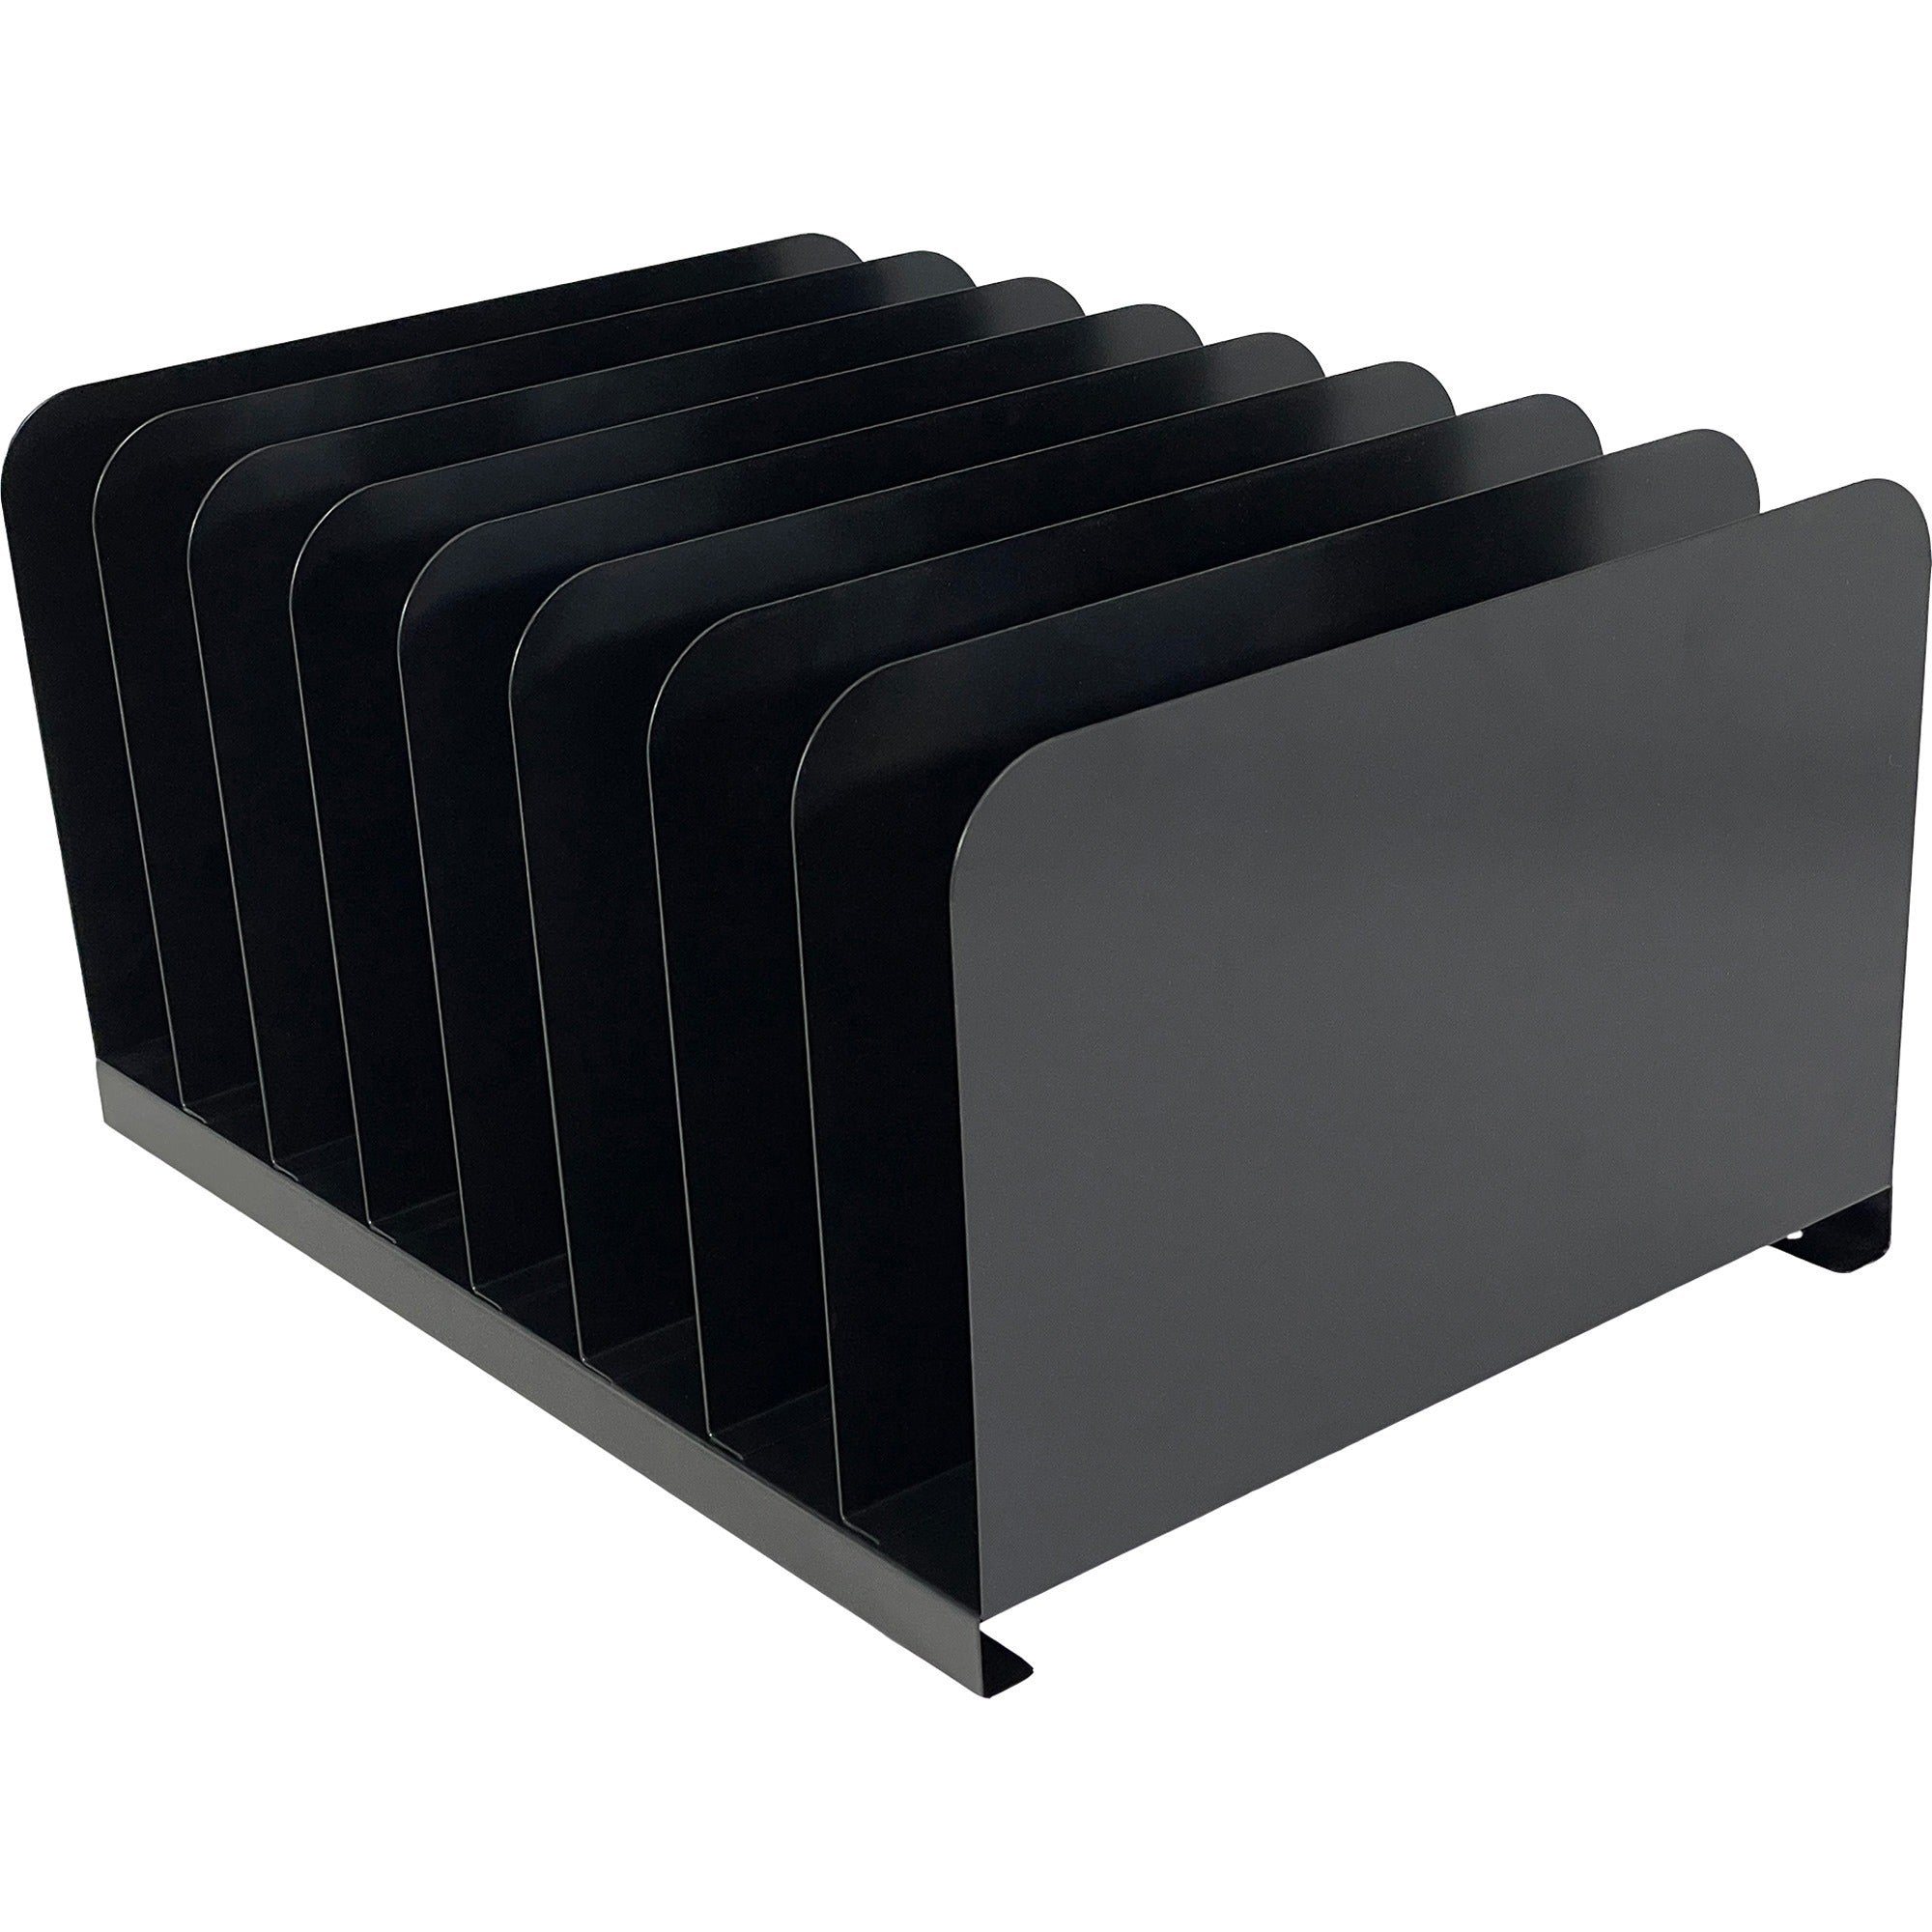 huron-vertical-desk-organizer-8-compartments-vertical-78-height-x-11-width-x-15-depth-durable-black-steel-1-each_hurhasz0146 - 1